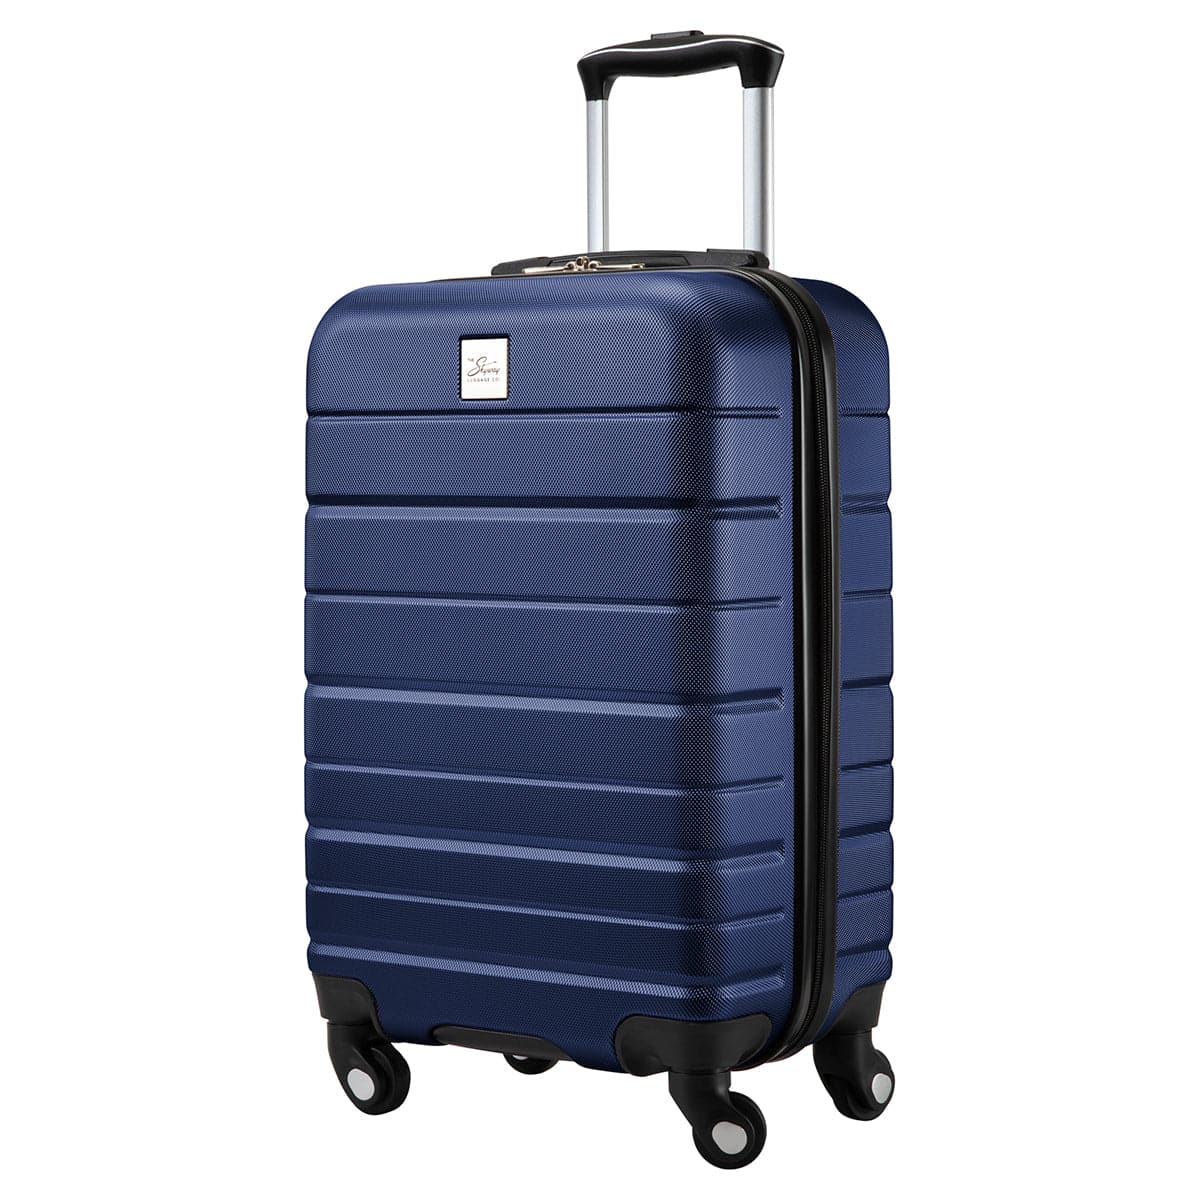 Skyway Epic 2.0  Hardside Carry-On Luggage